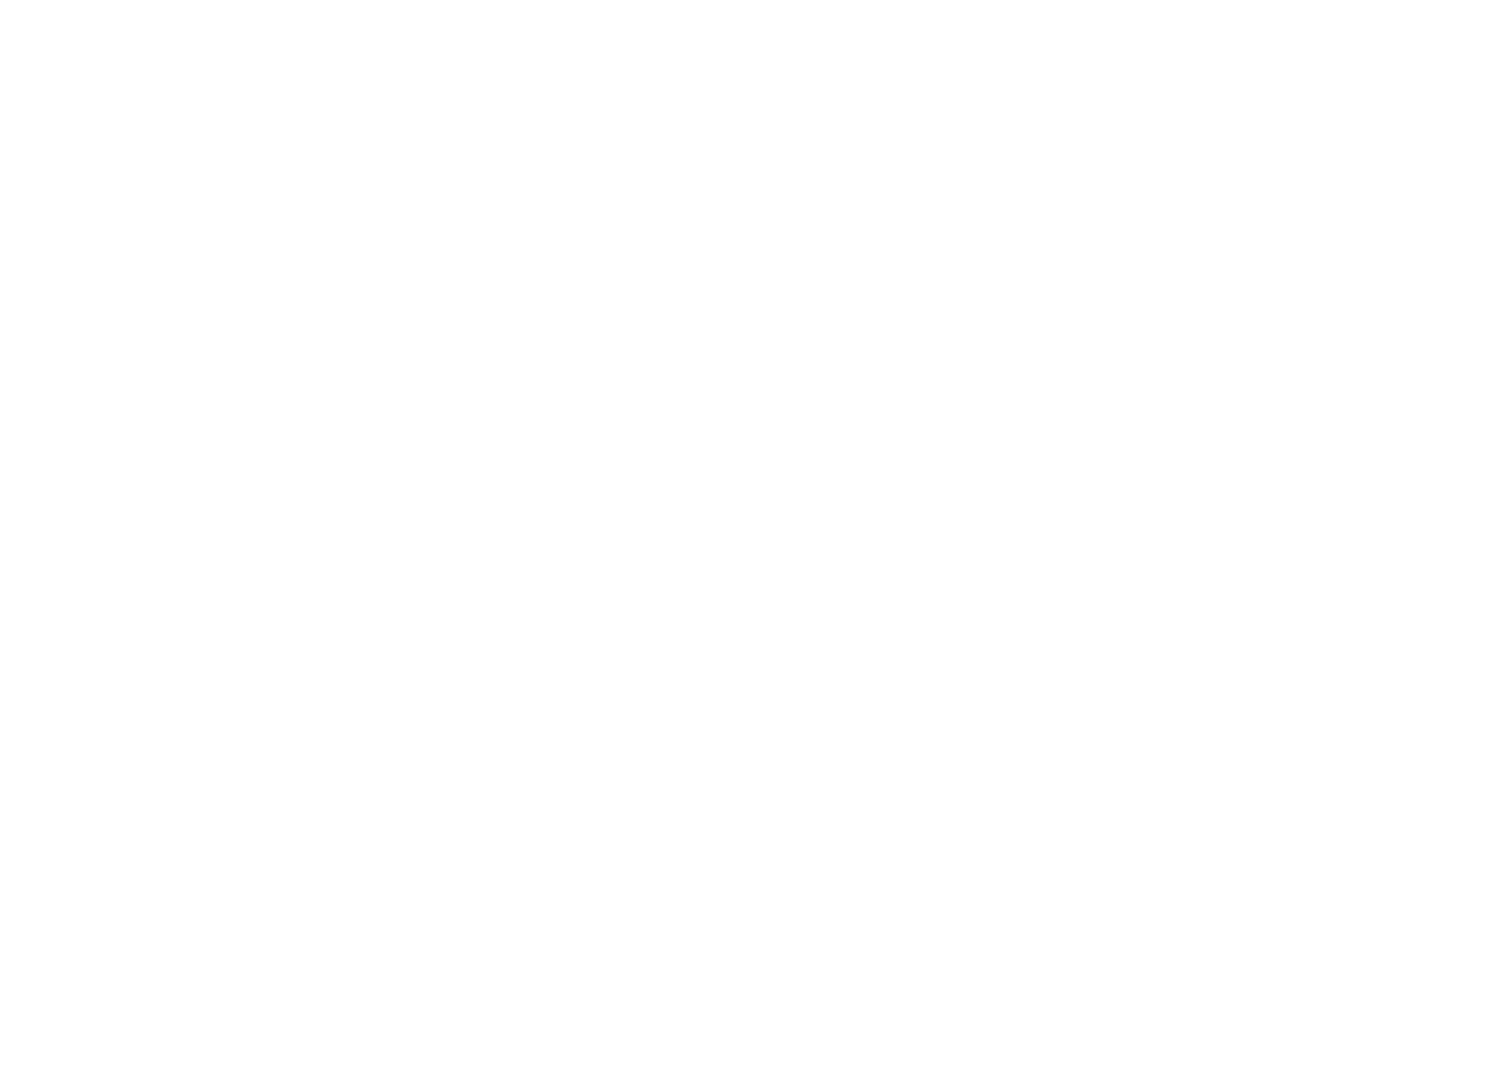 PROJECT Aspen